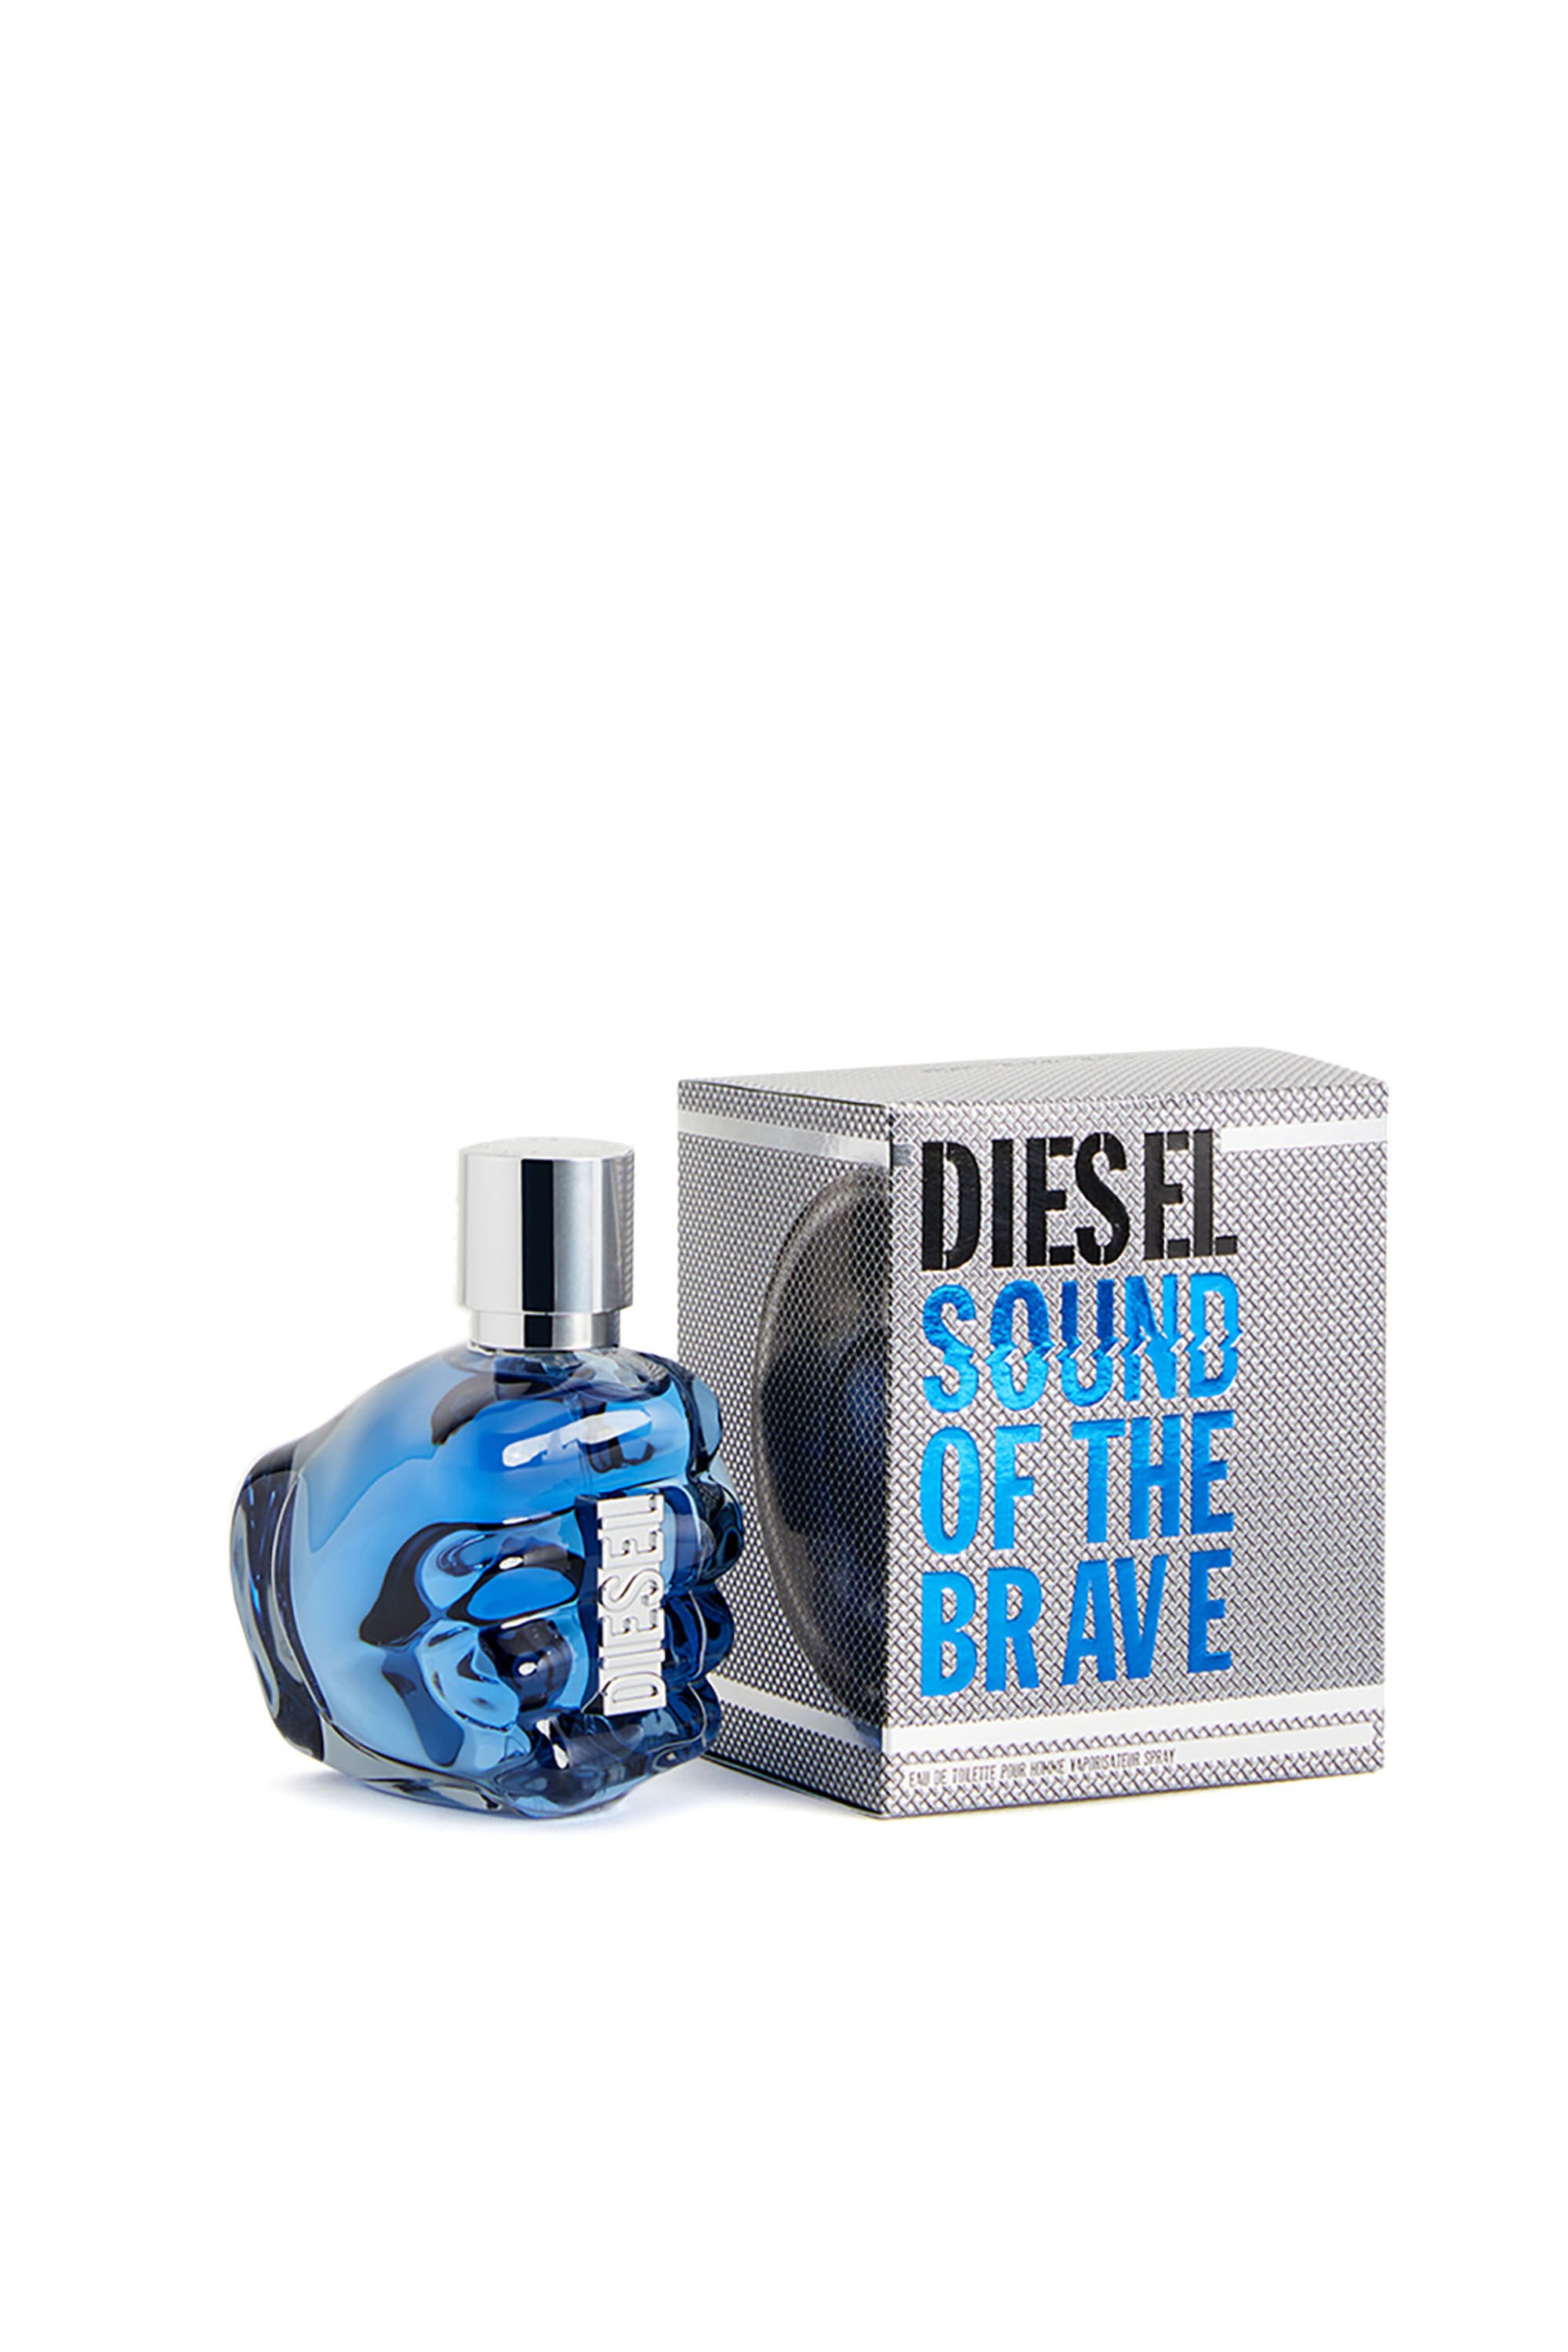 Diesel - SOUND OF THE BRAVE 35ML, Blu - Image 2